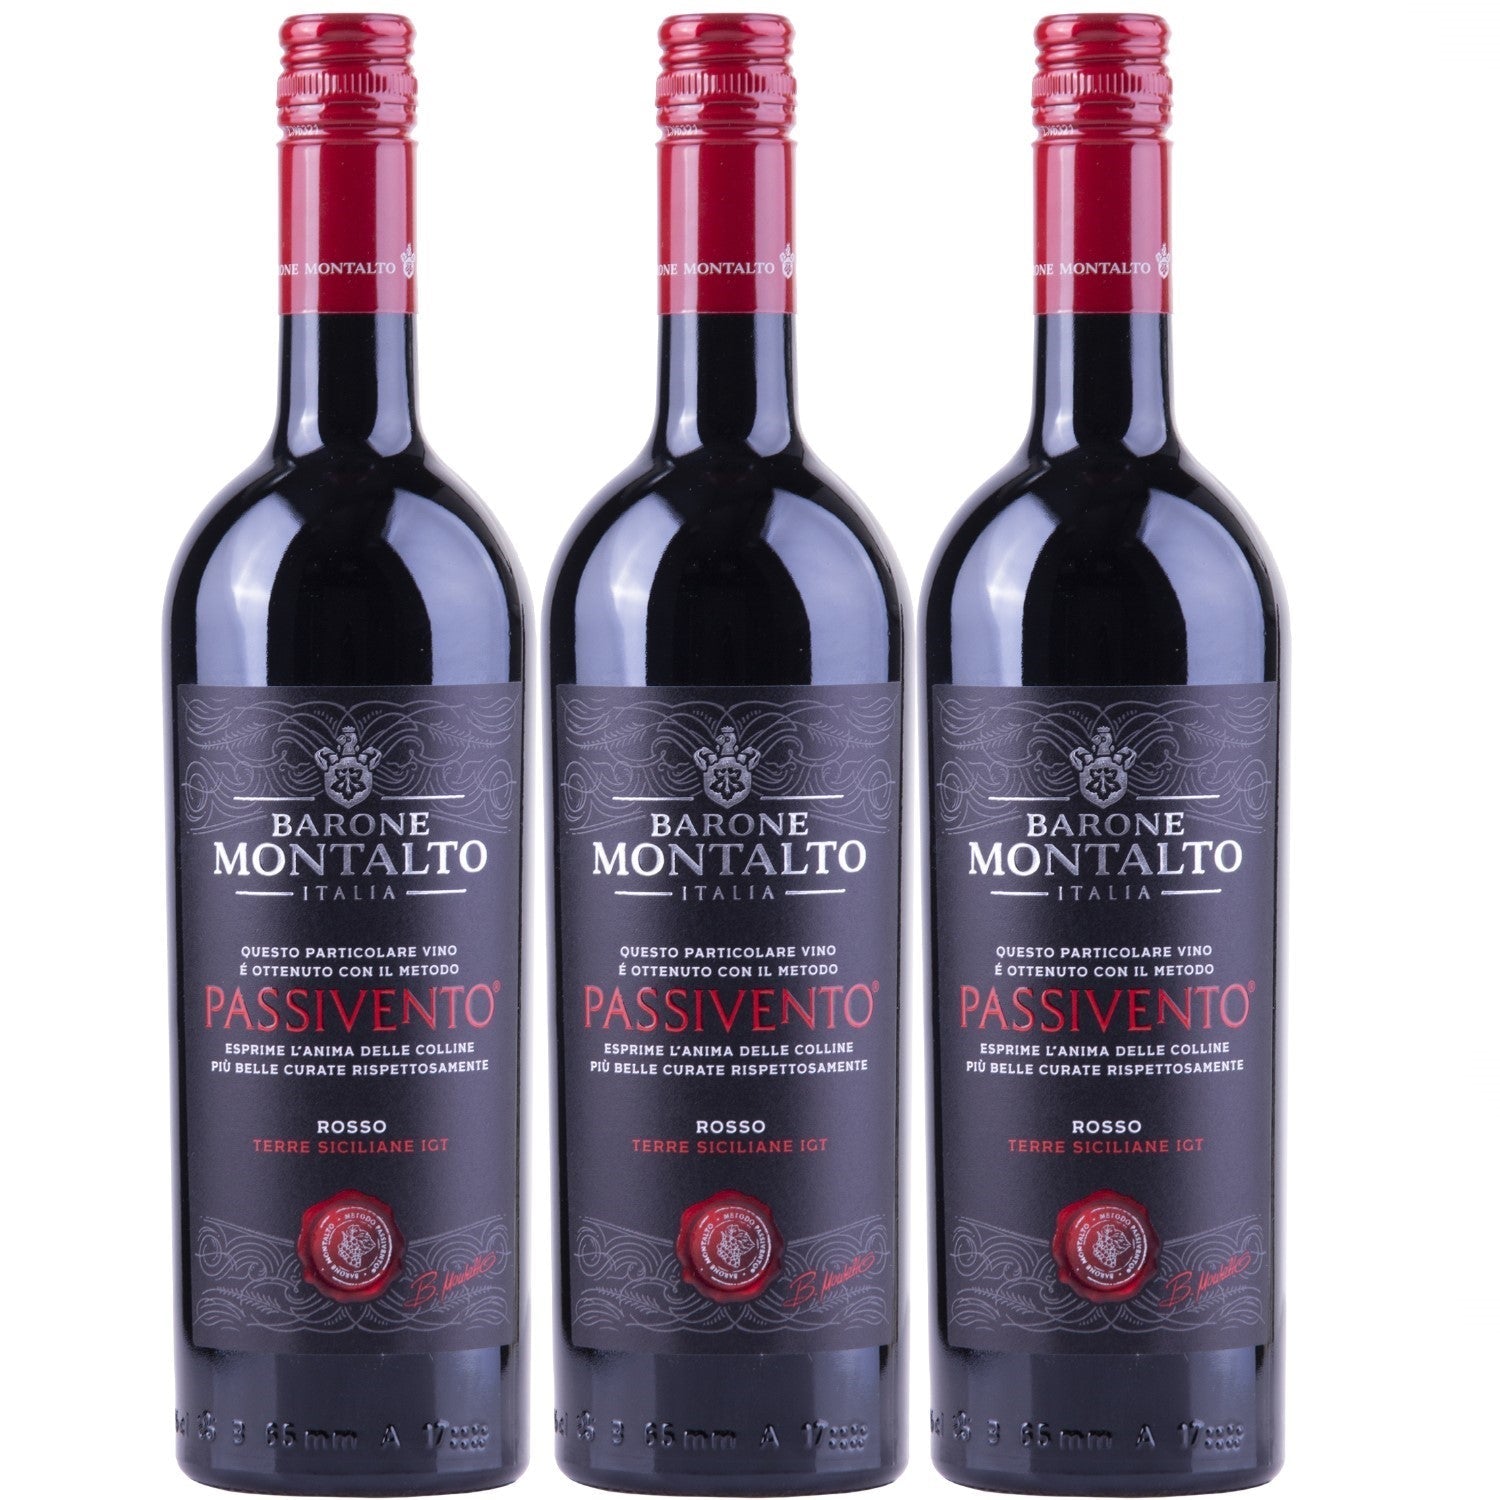 Barone Montalto Passivento Rosso Terre Siciliane IGT Rotwein Wein halbtrocken (3 x 0.75l) - Versanel -